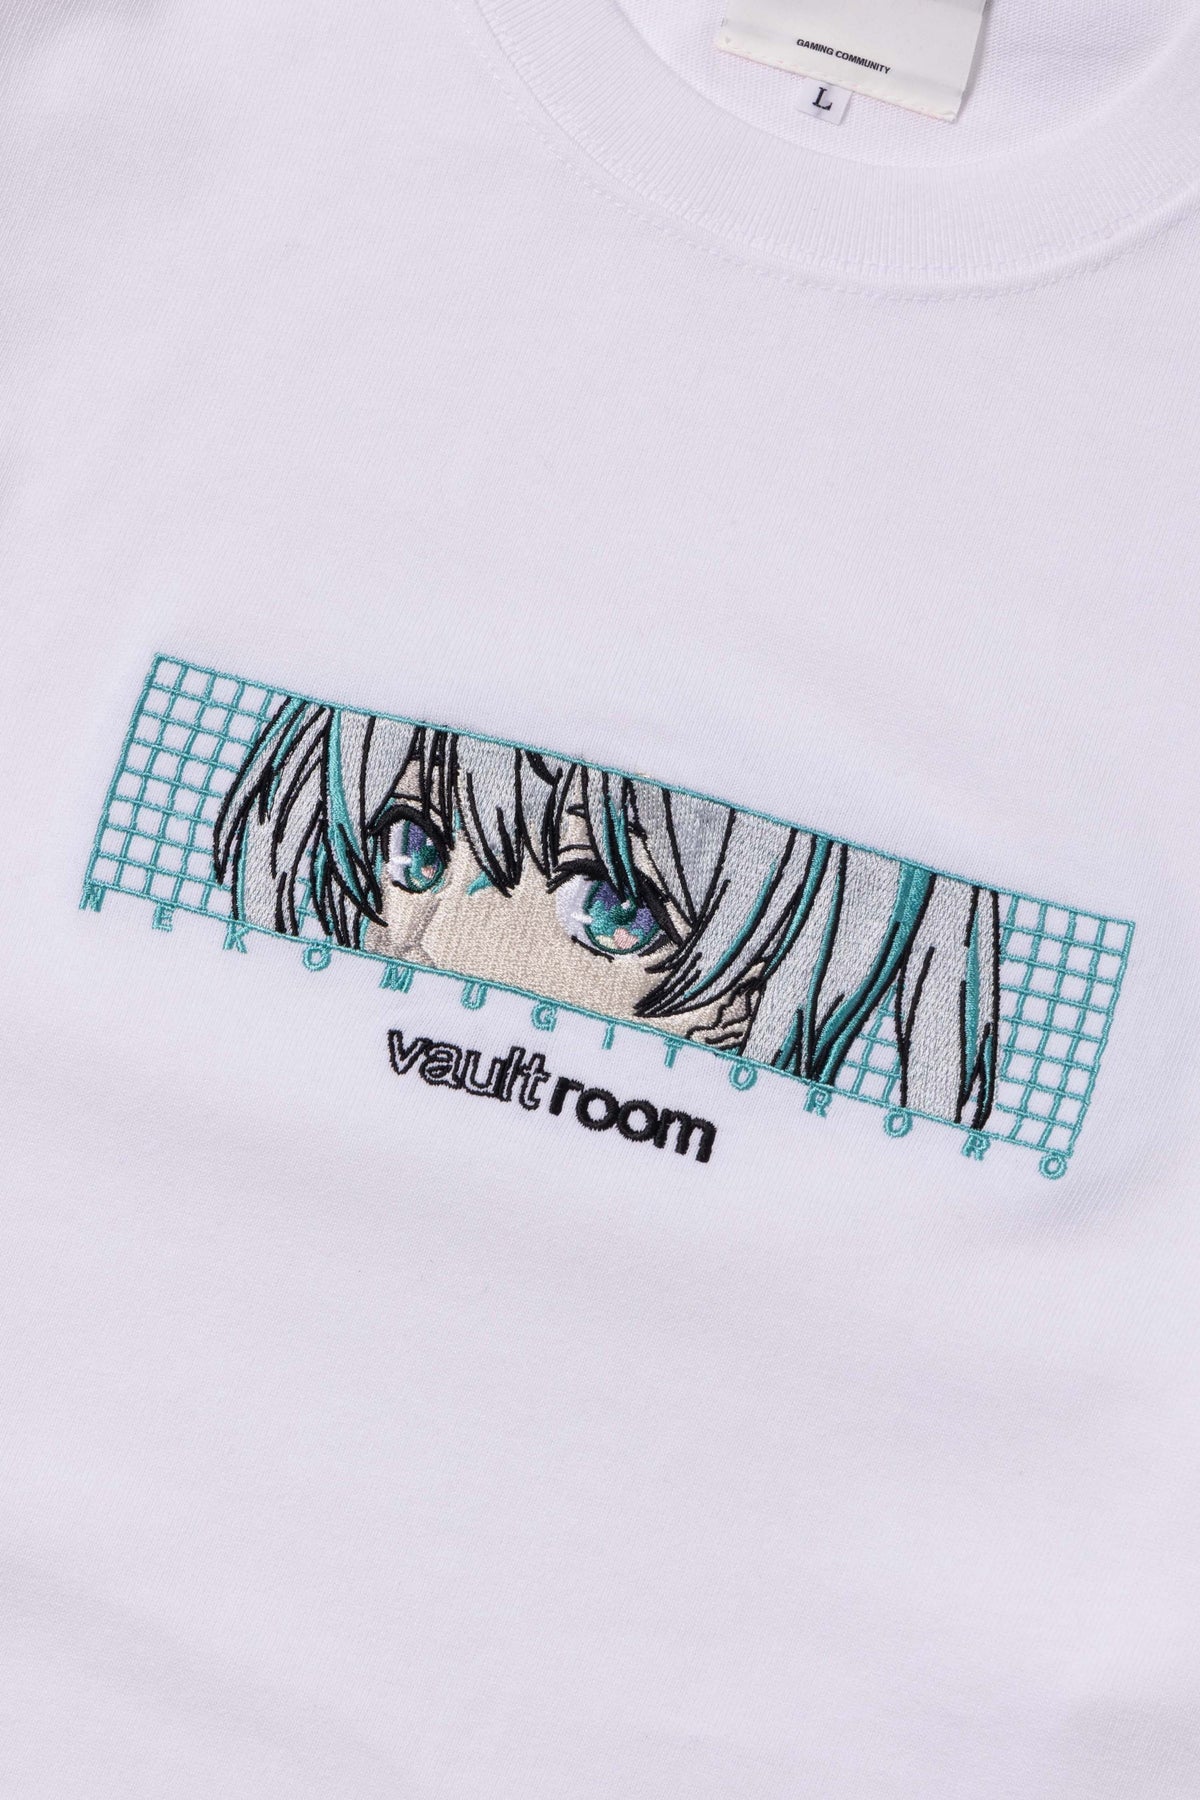 NEKOMUGI TORORO TEE / WHT vaultroom - Tシャツ/カットソー(半袖/袖なし)